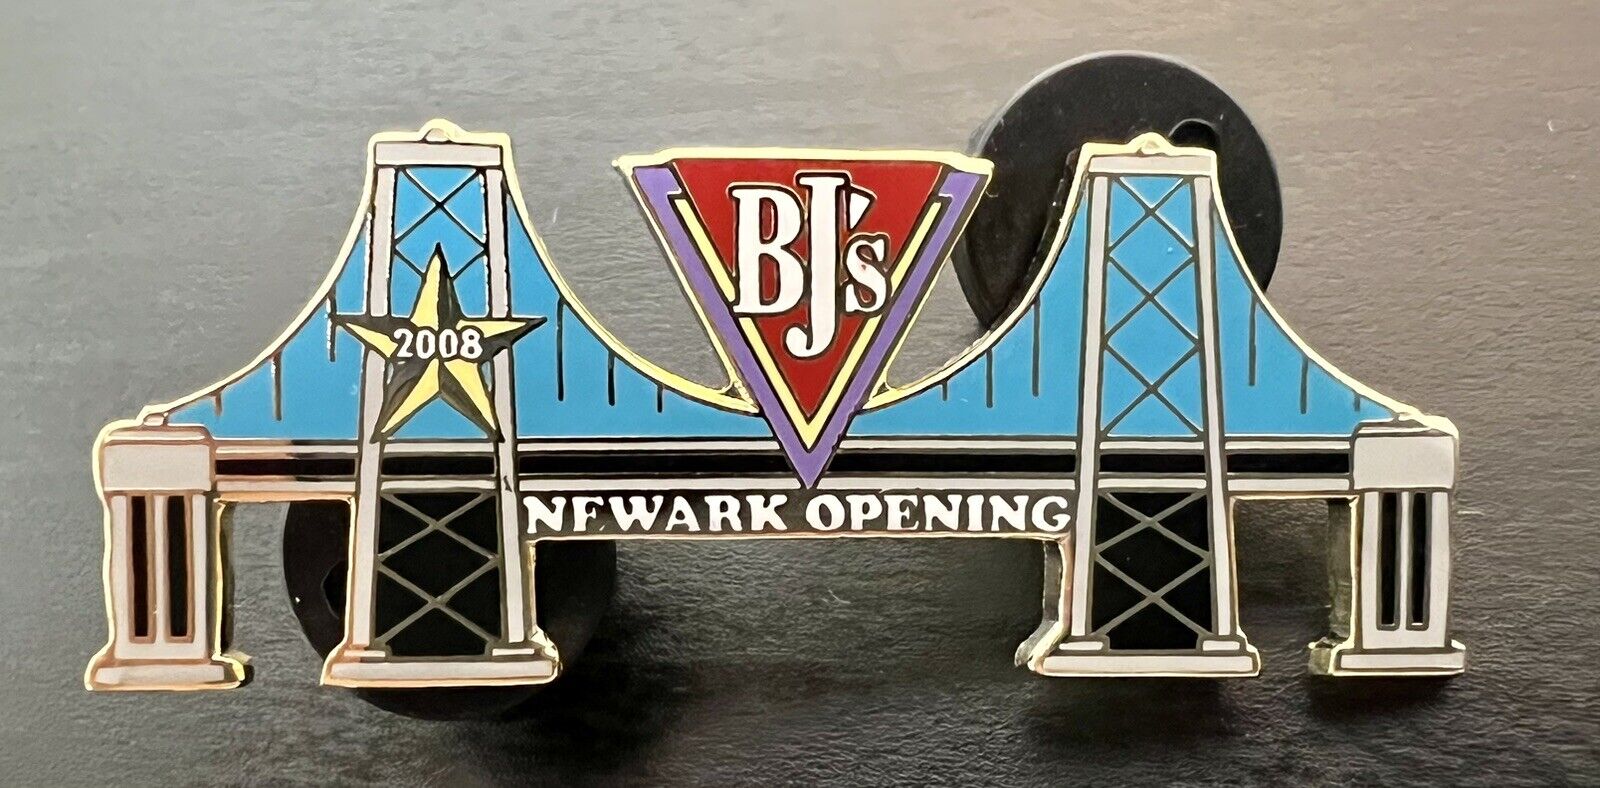 BJ’s Restaurant 2008 Newark Bridge Opening Pin RARE